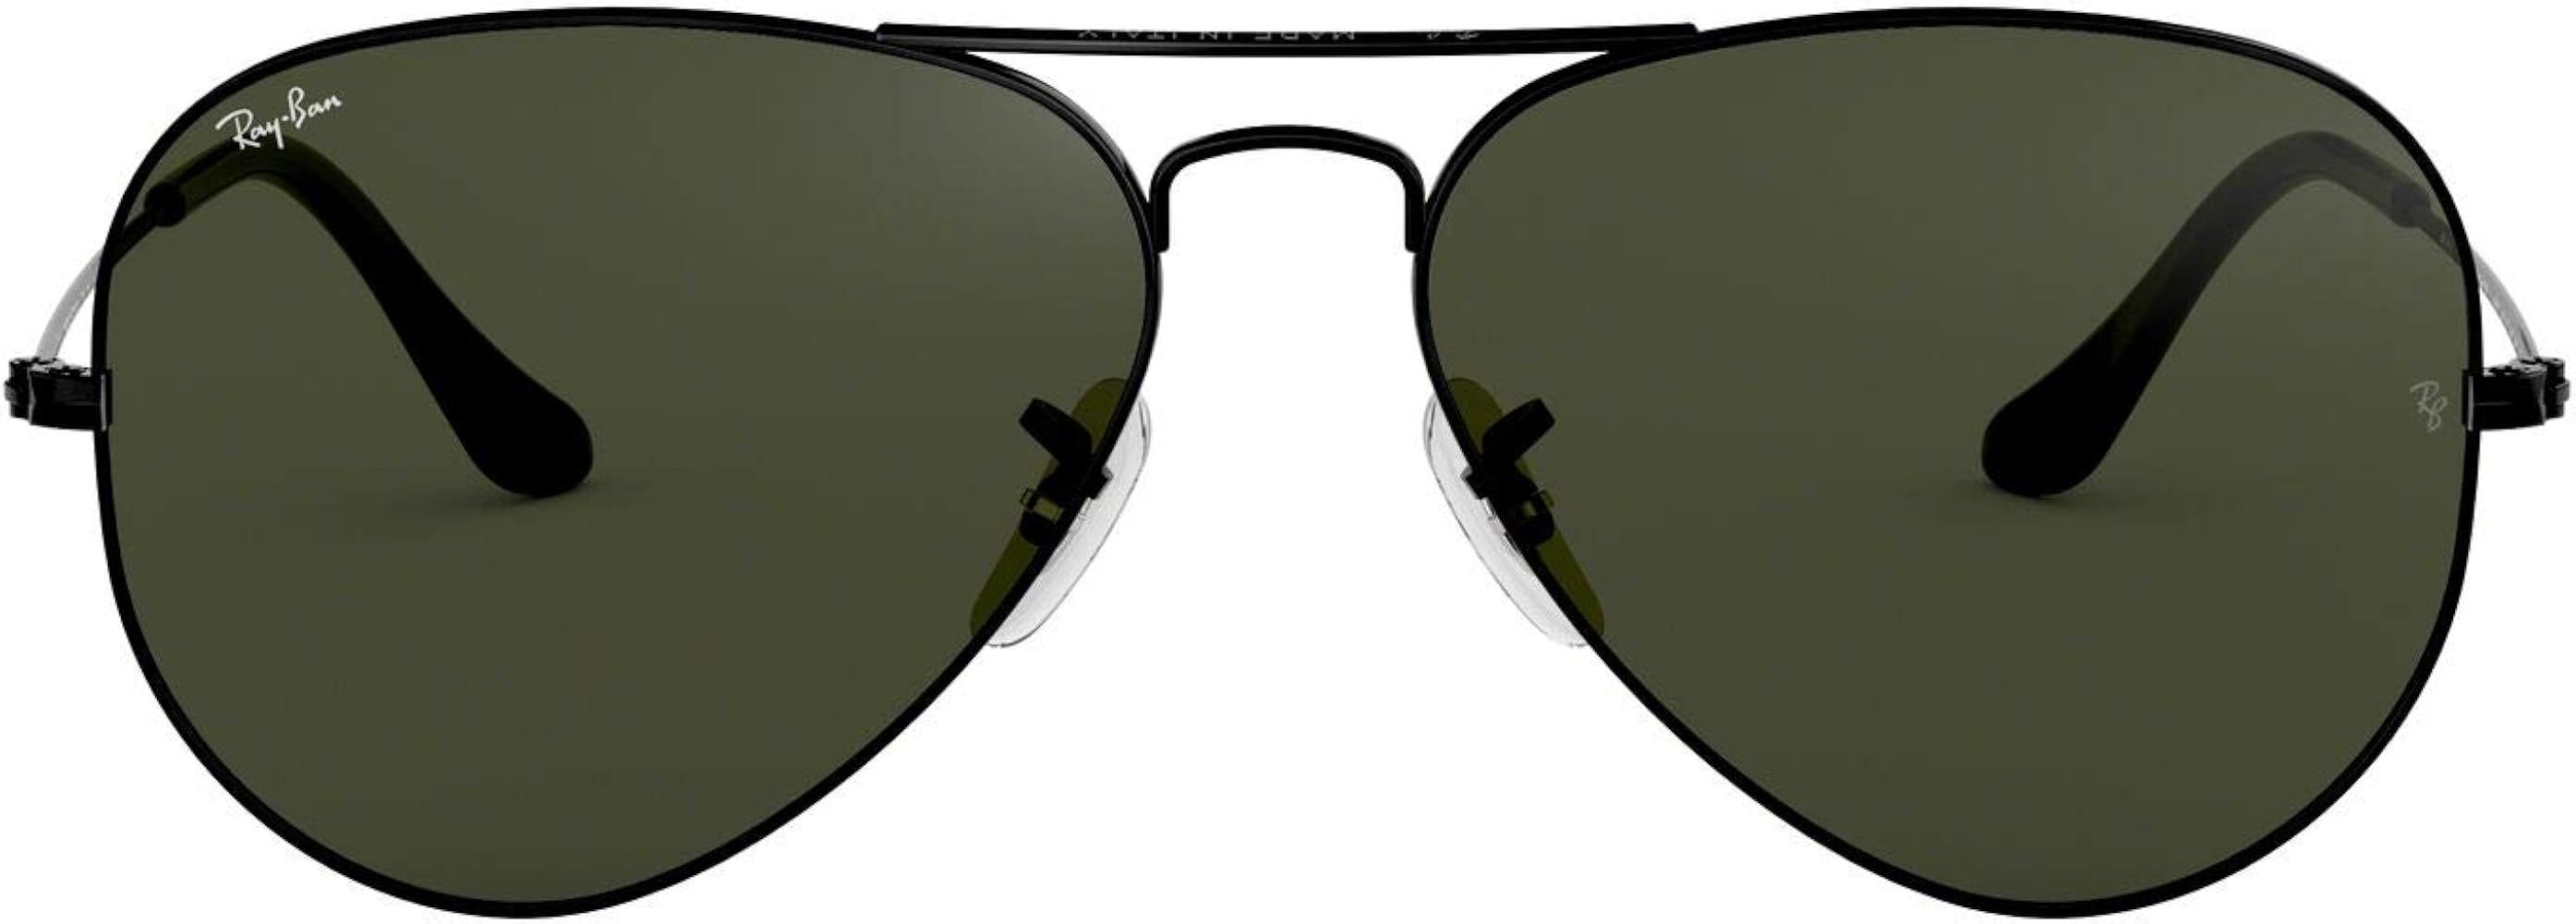 Rb3025 Classic Aviator Sunglasses | Amazon (US)